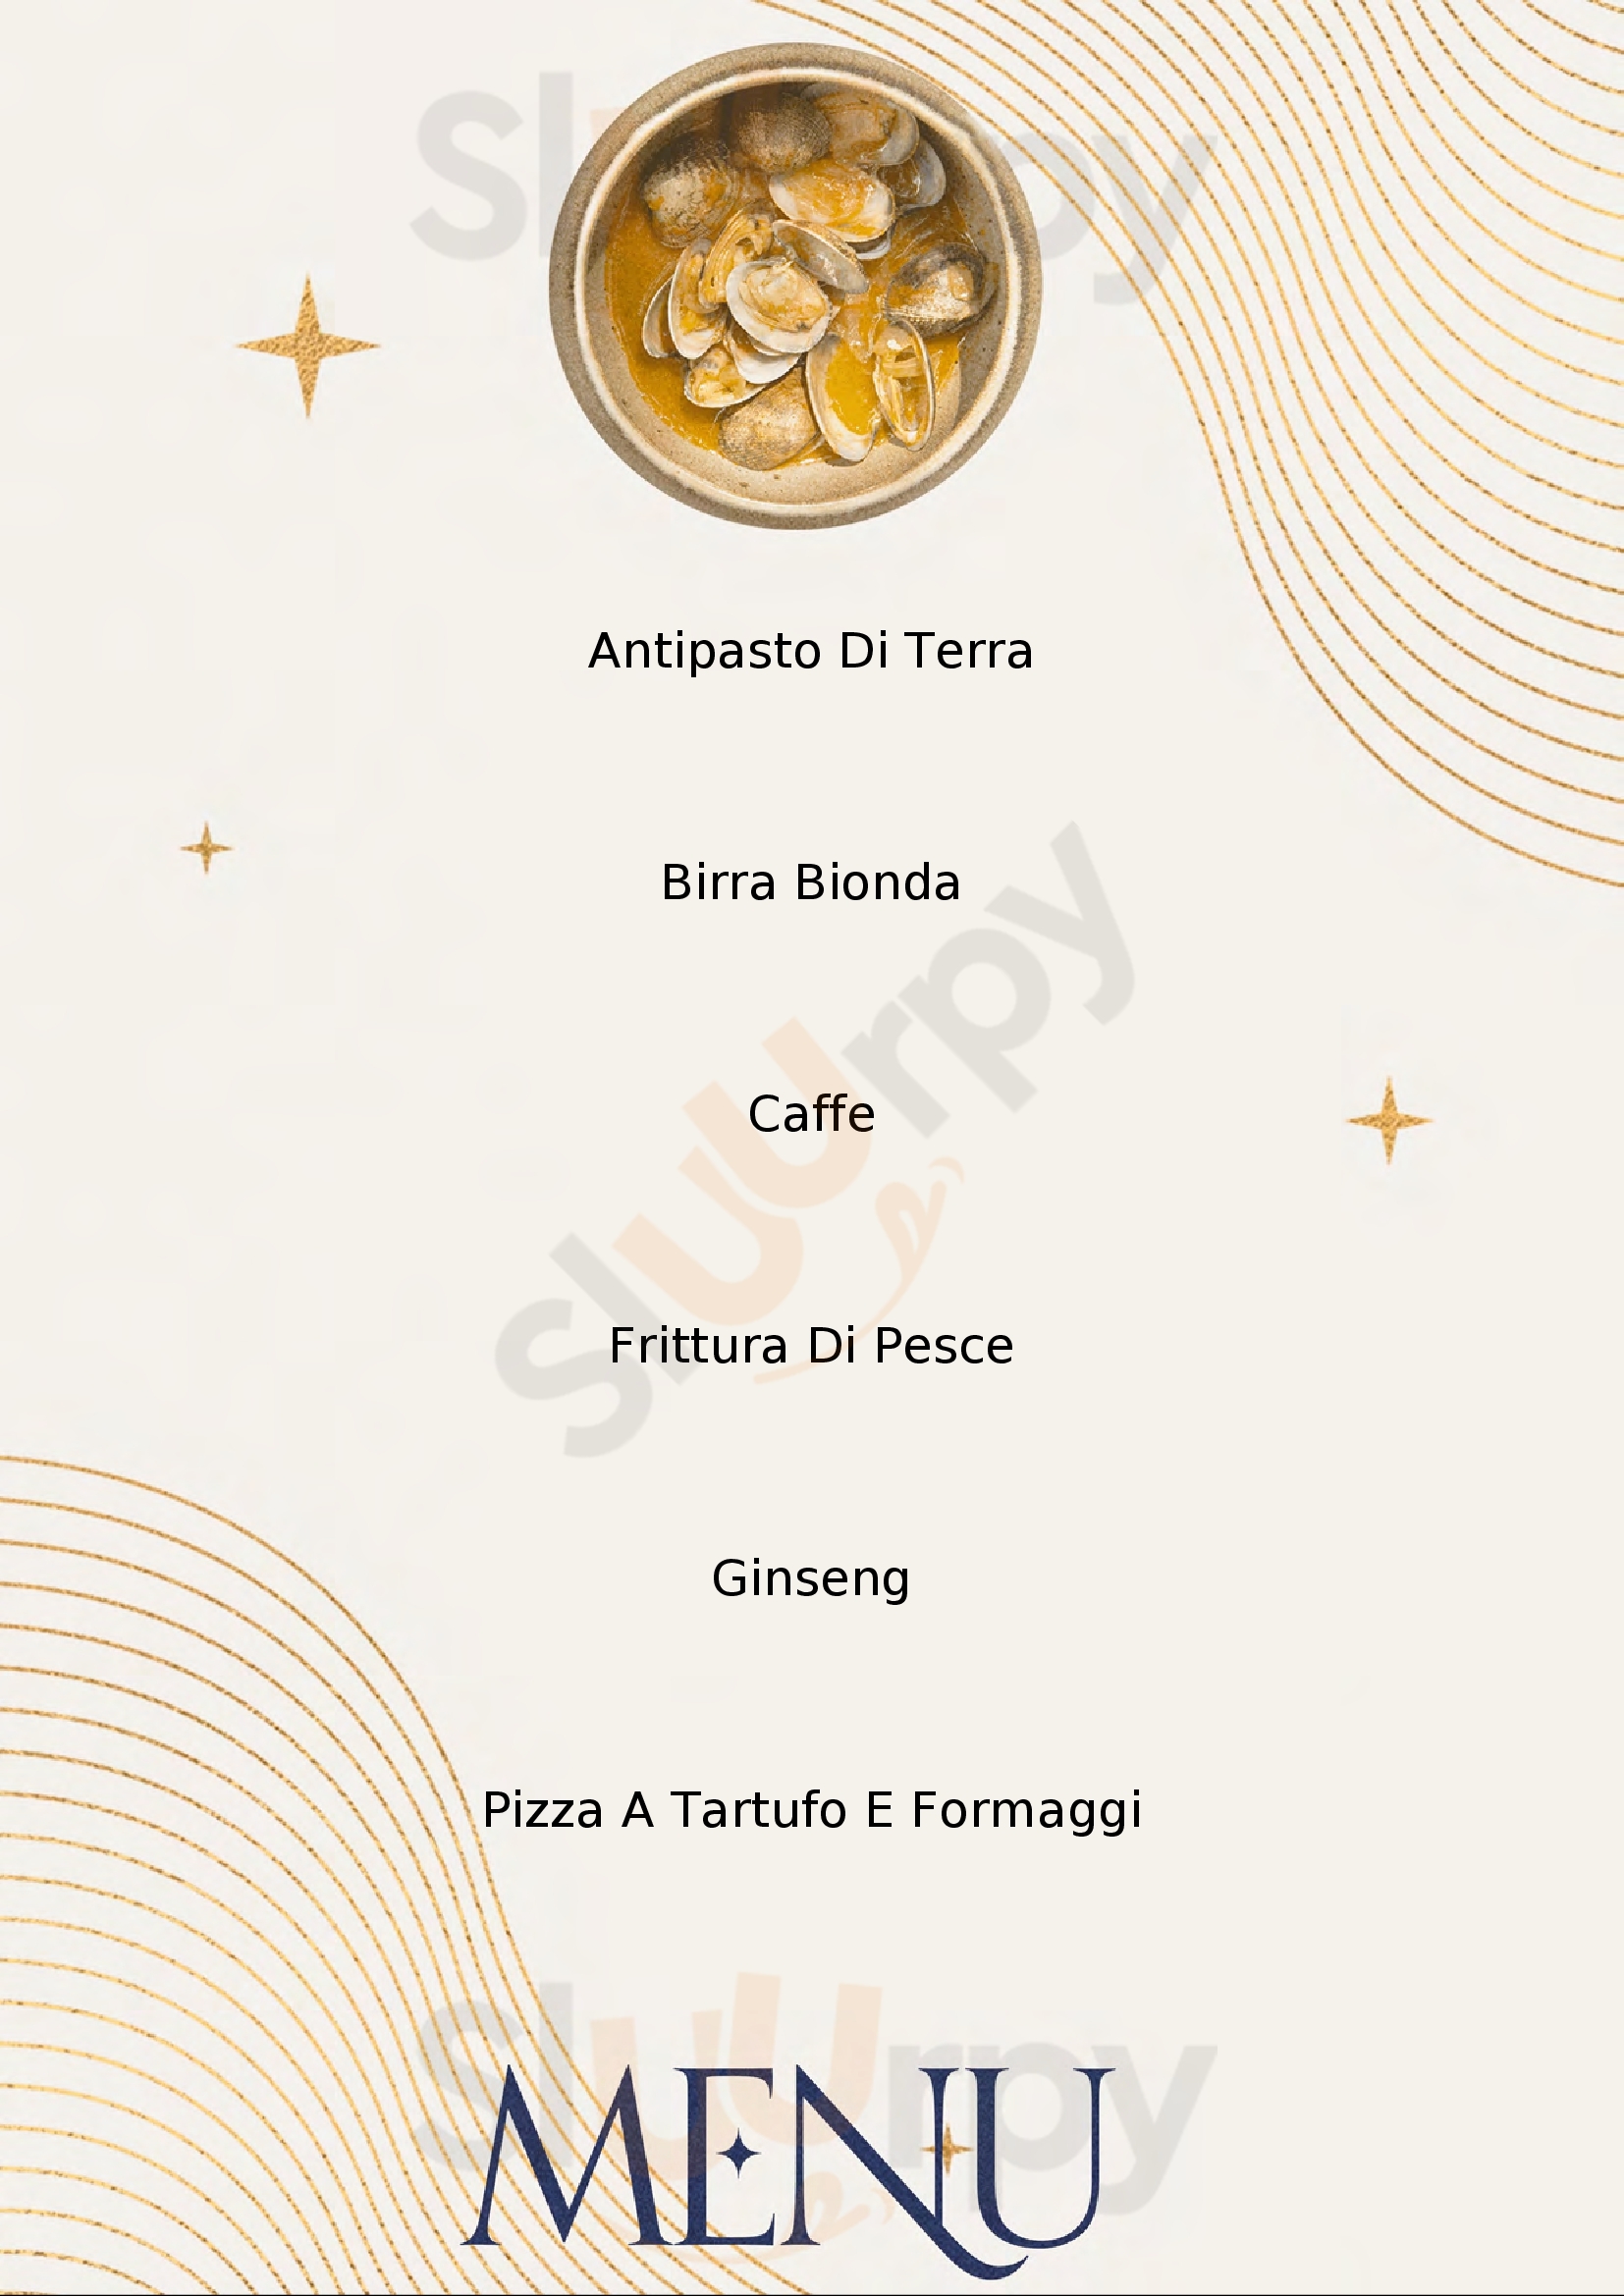 La Belle Époque - Ristorante E Pizzeria - Bar, Pasticceria, Gelateria Italiana Lucera menù 1 pagina